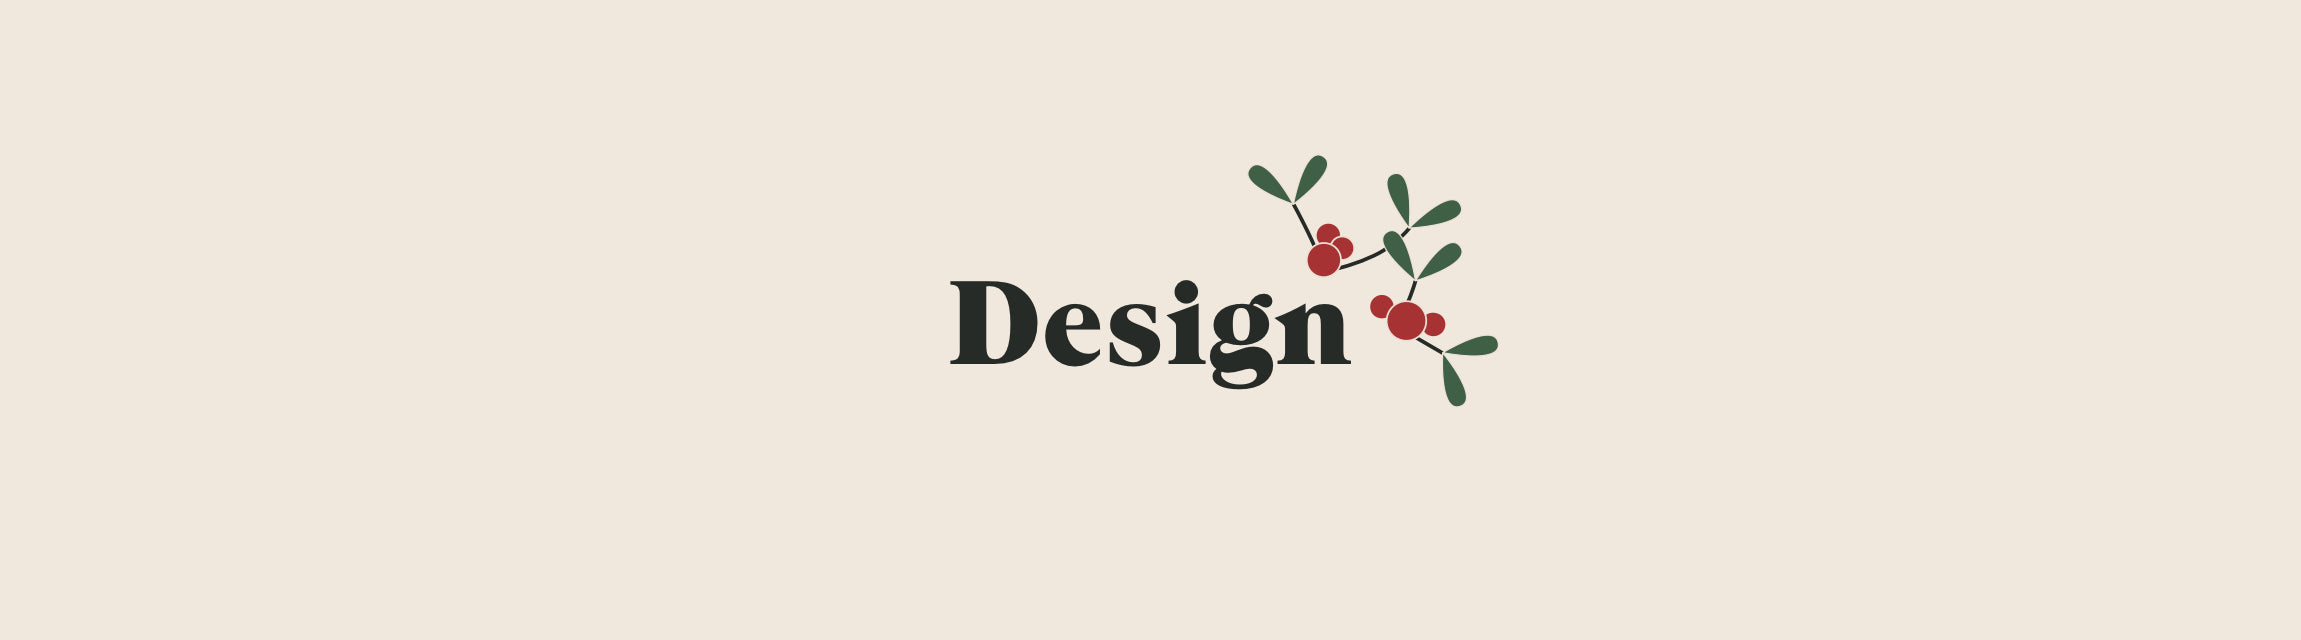 Design title with mistletoe icon